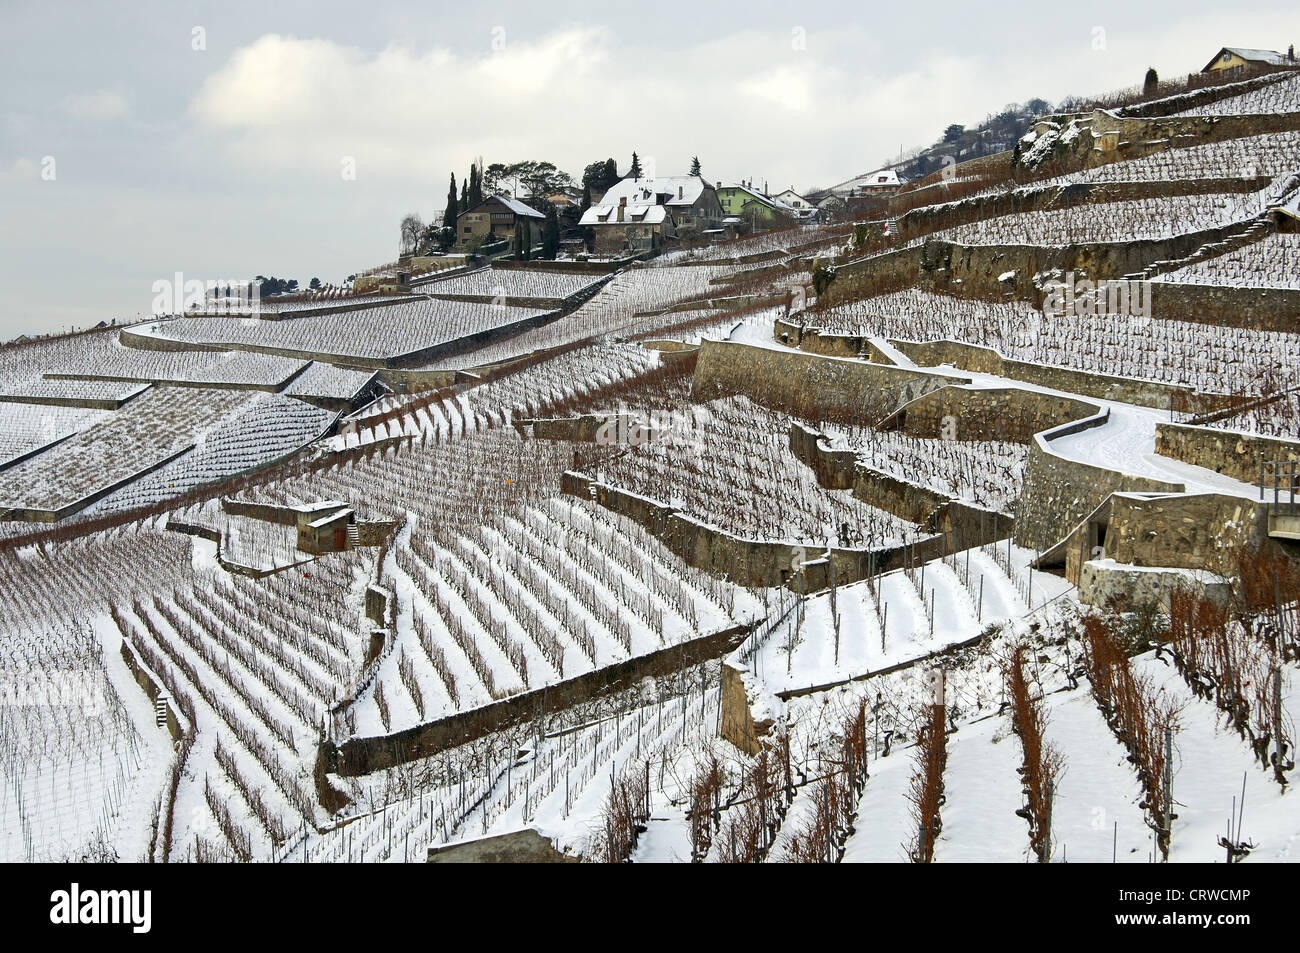 Terraced vineyards, Lavaux, Switzerland Stock Photo